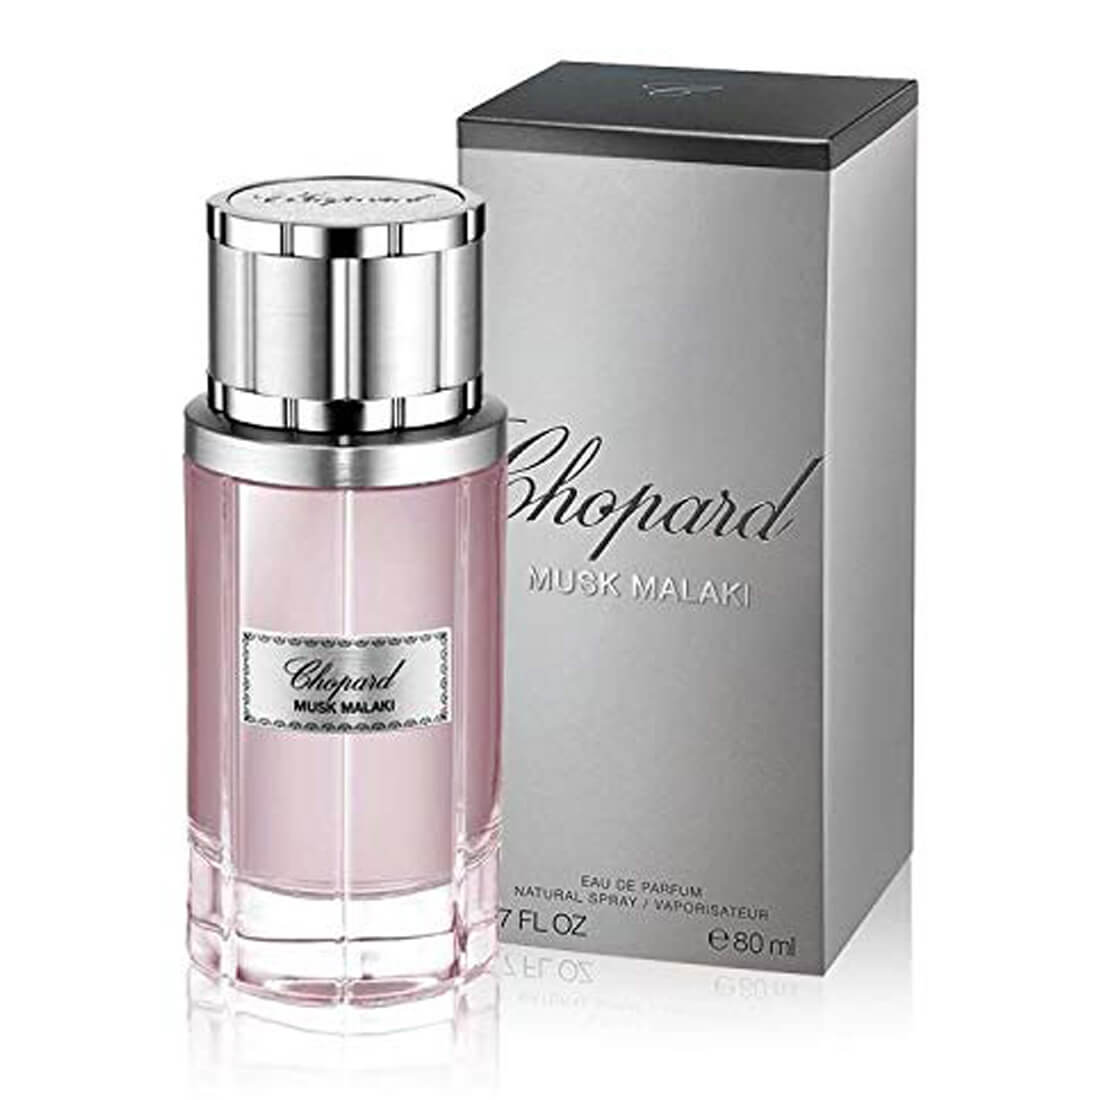 Chopard Musk Malaki Eau De Perfume For Unisex - 80ml